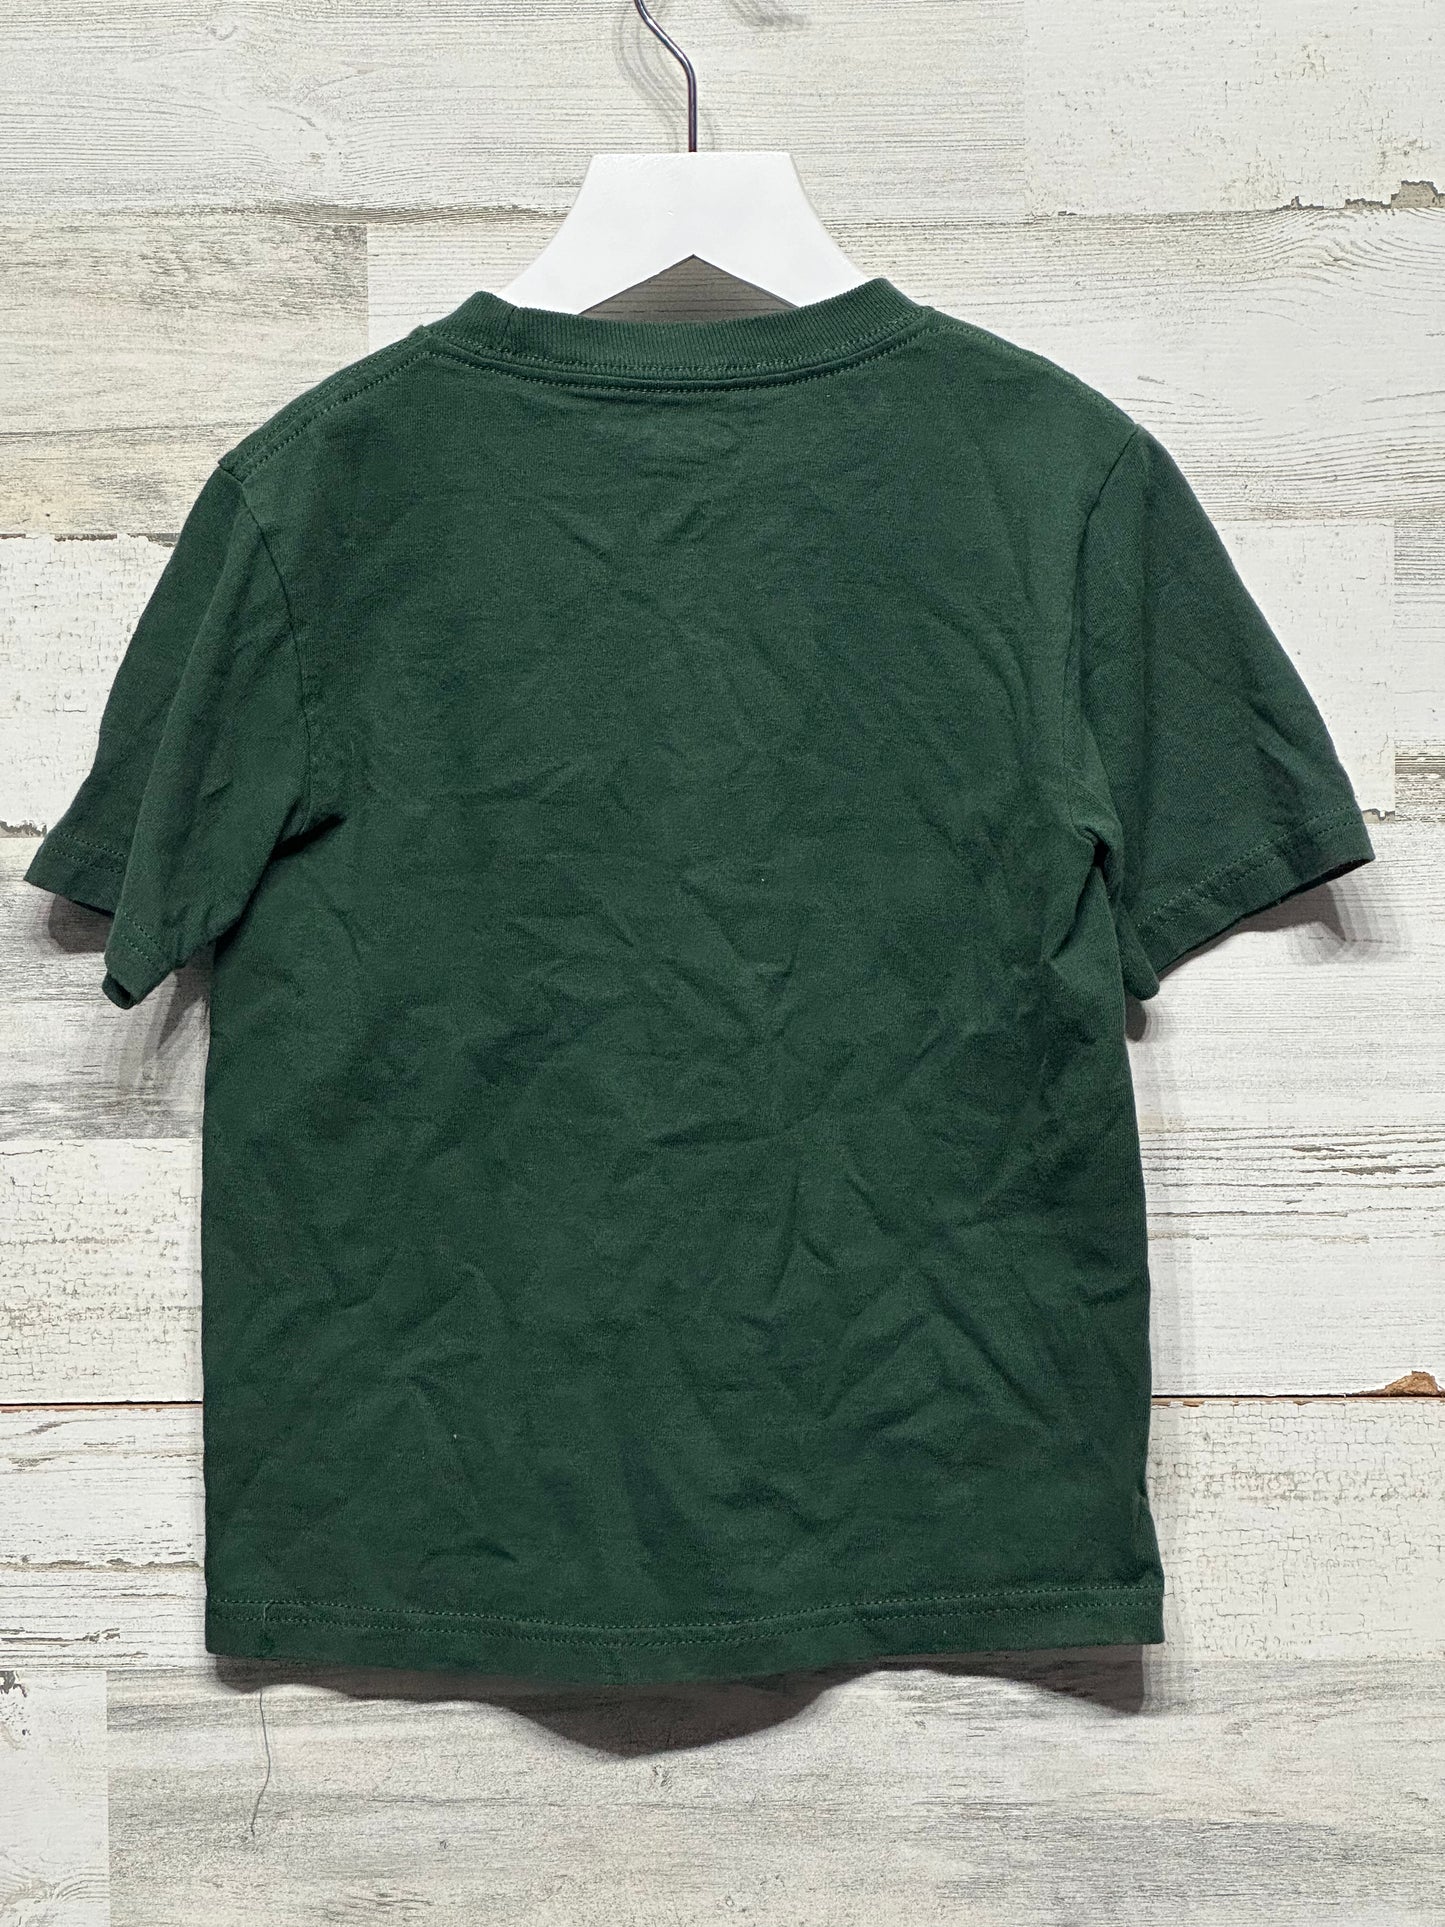 Boys Size 4/5 Champion Baylor Shirt - Good Used Condition